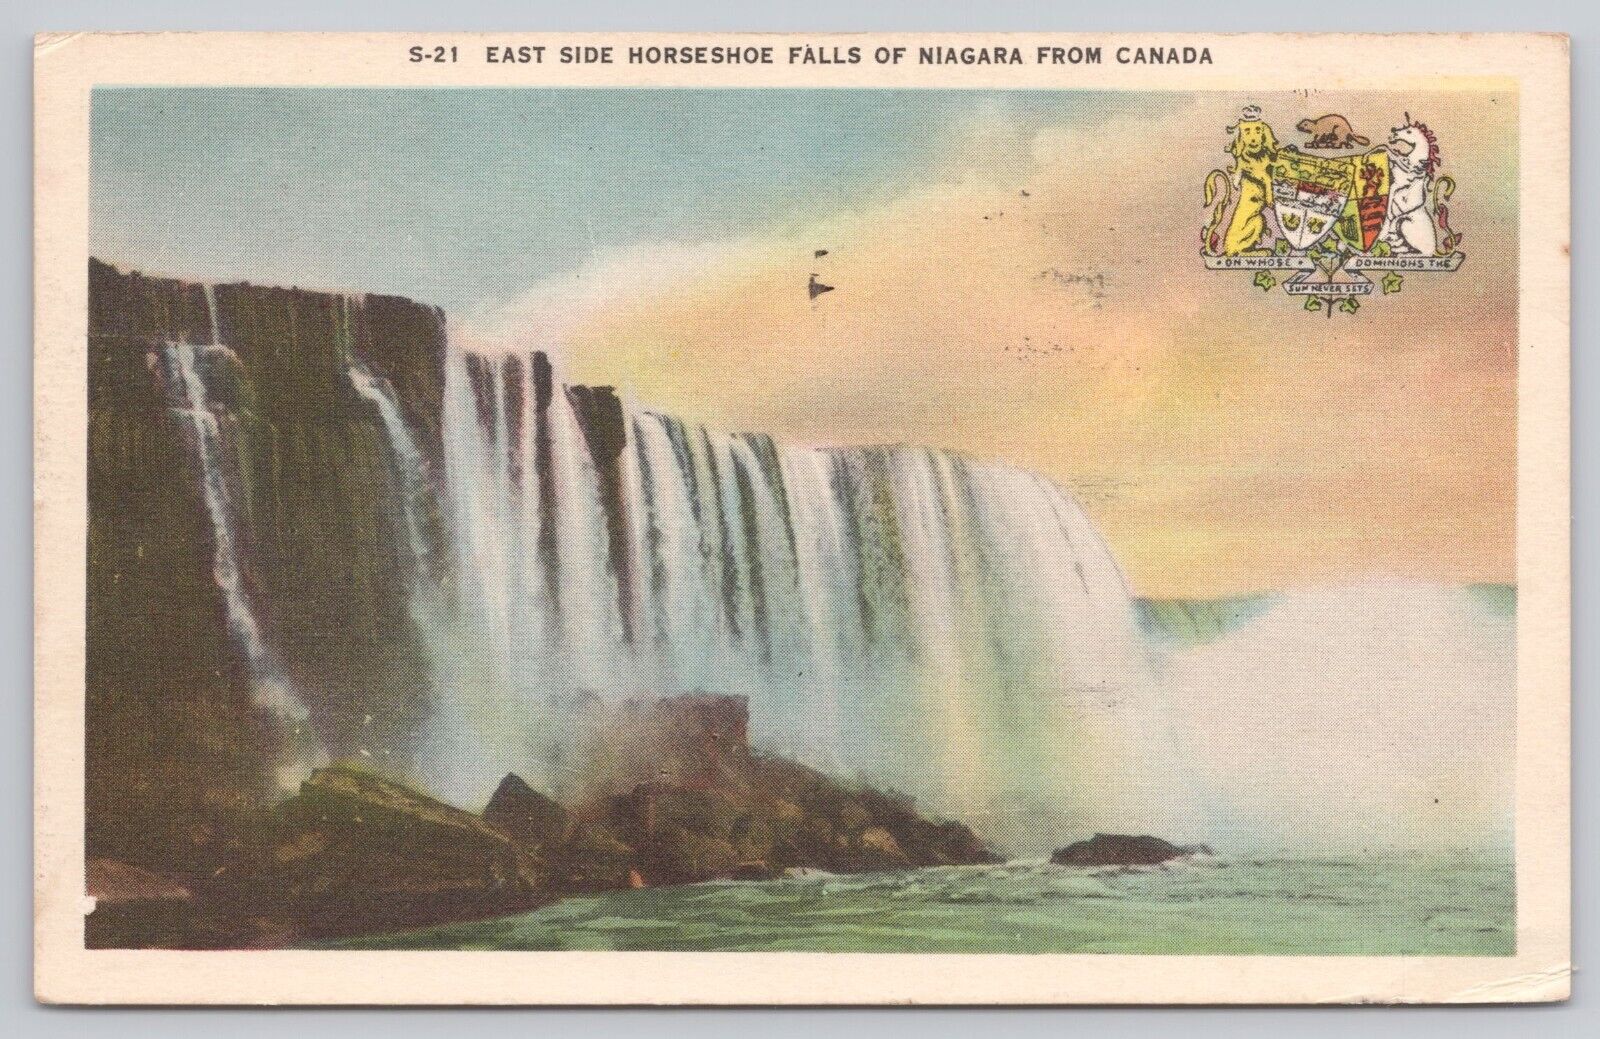 Niagara Falls Ontario Canada, Horseshoe Falls East Side, Vintage Postcard